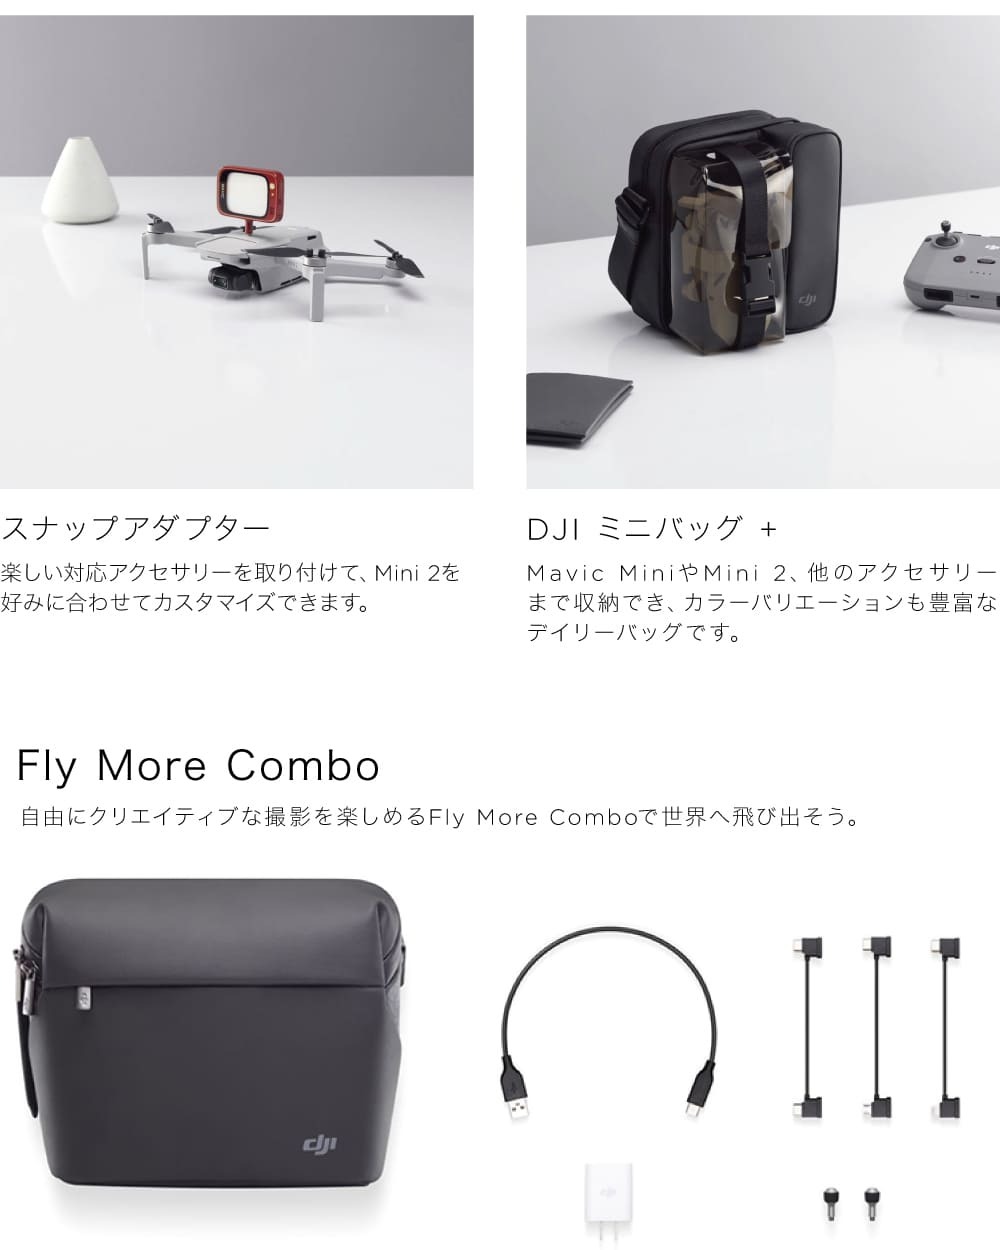 SALE ドローン DJI Mini 2 Fly More Combo ミニ2 小型 200g以下 カメラ 